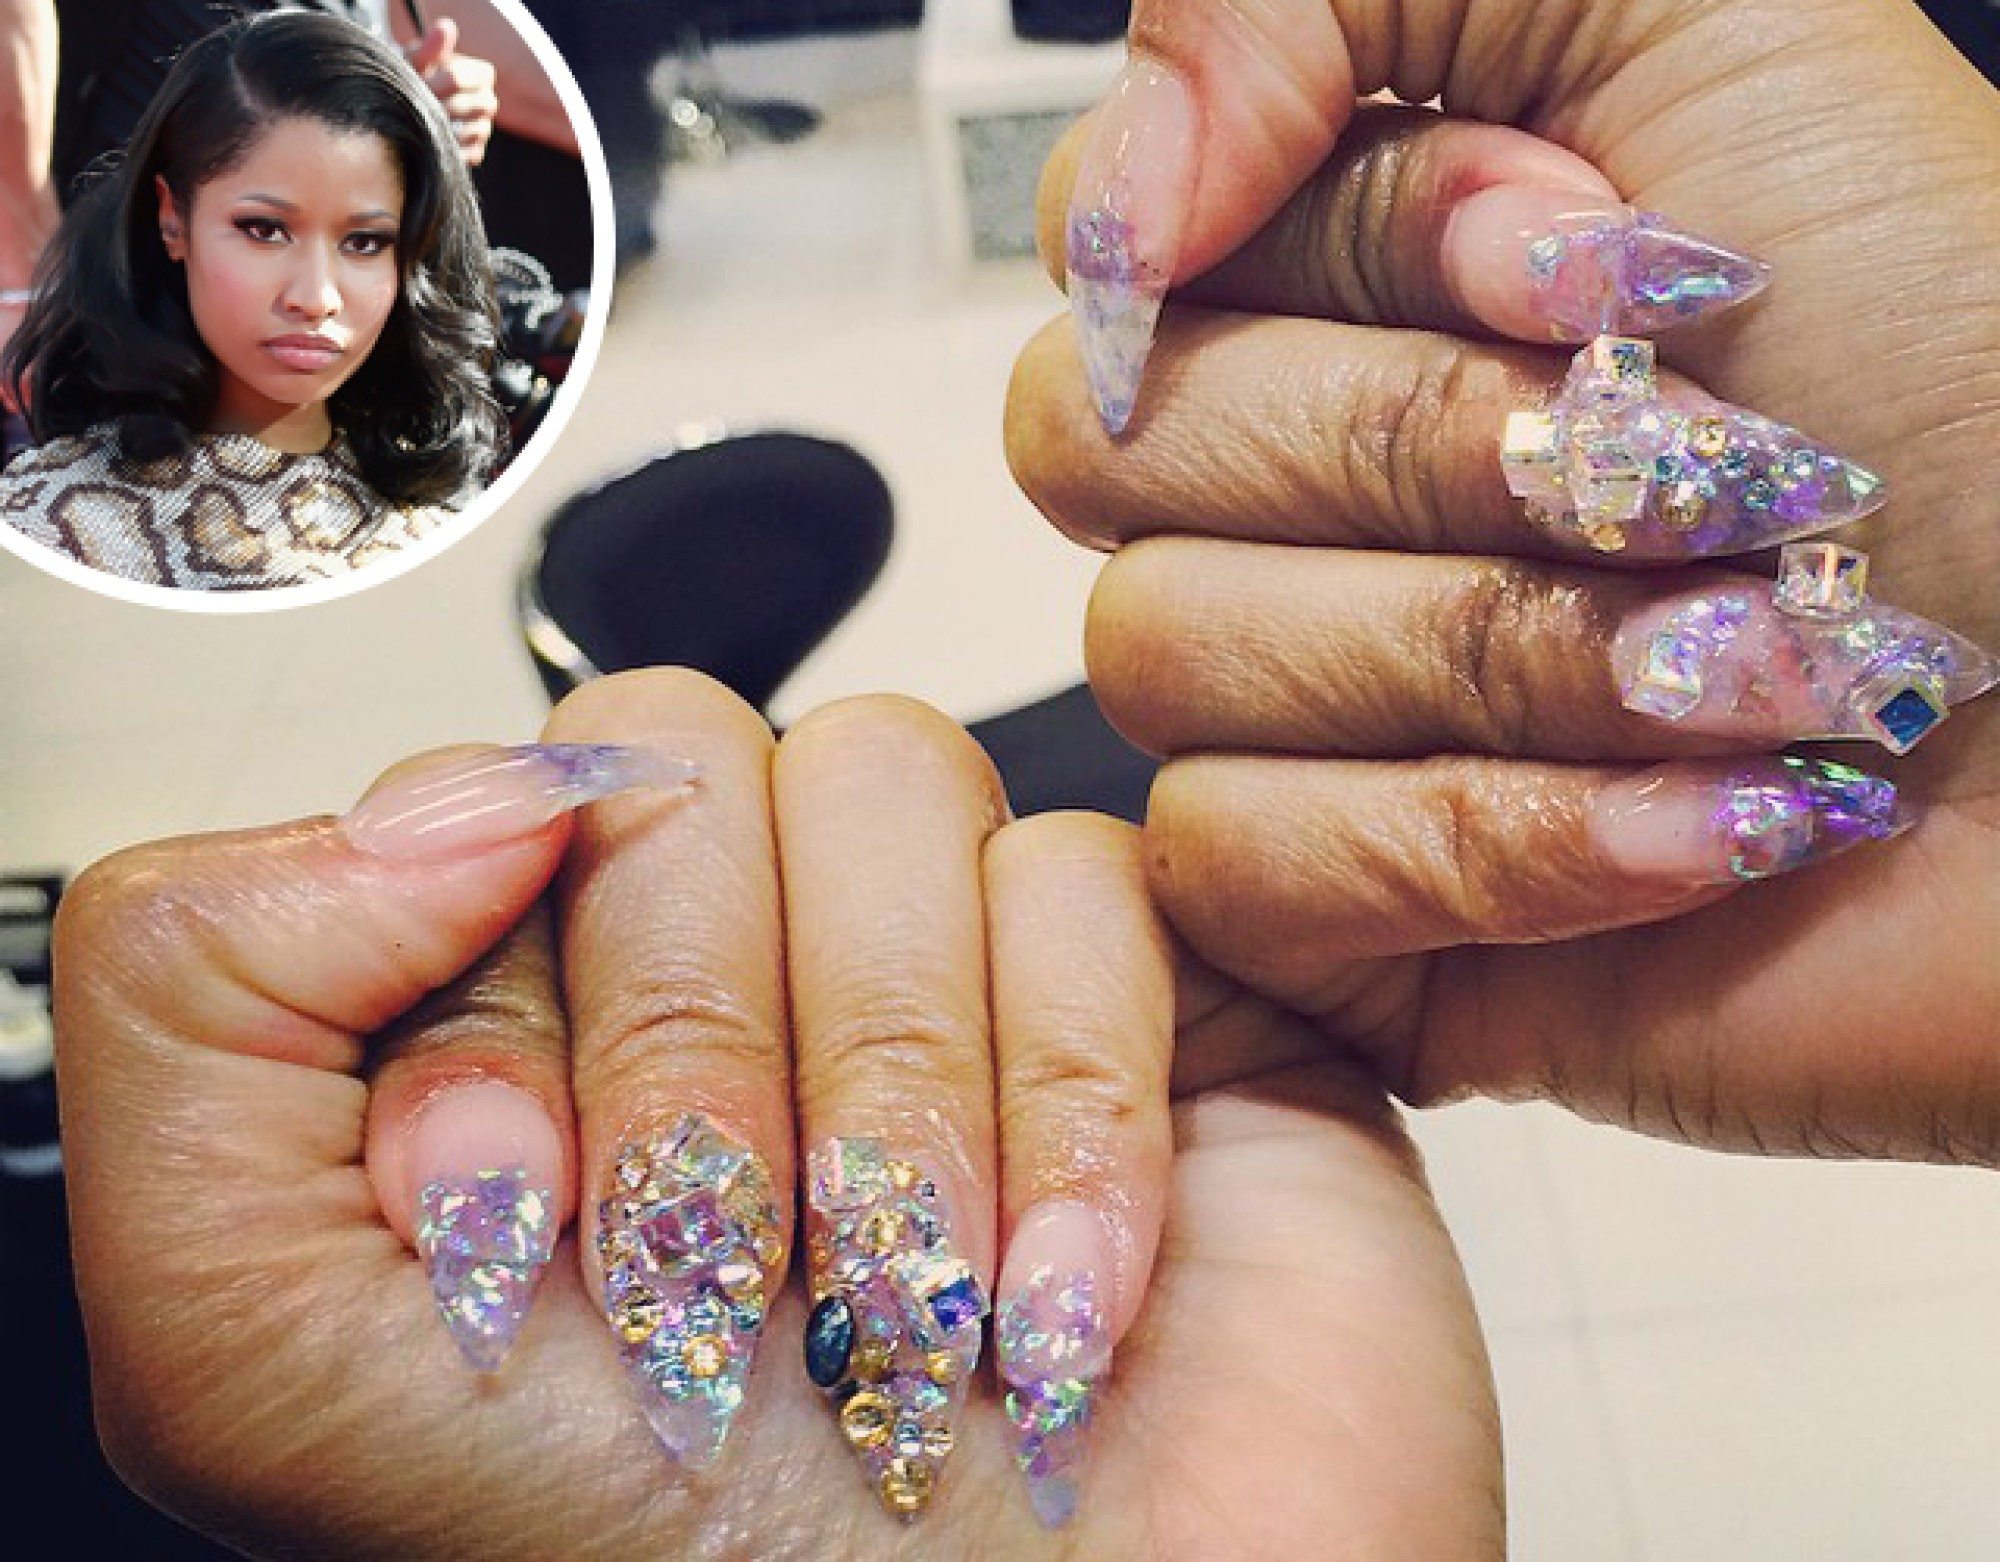 Nicki Minaj Real Hair Feet And Nails